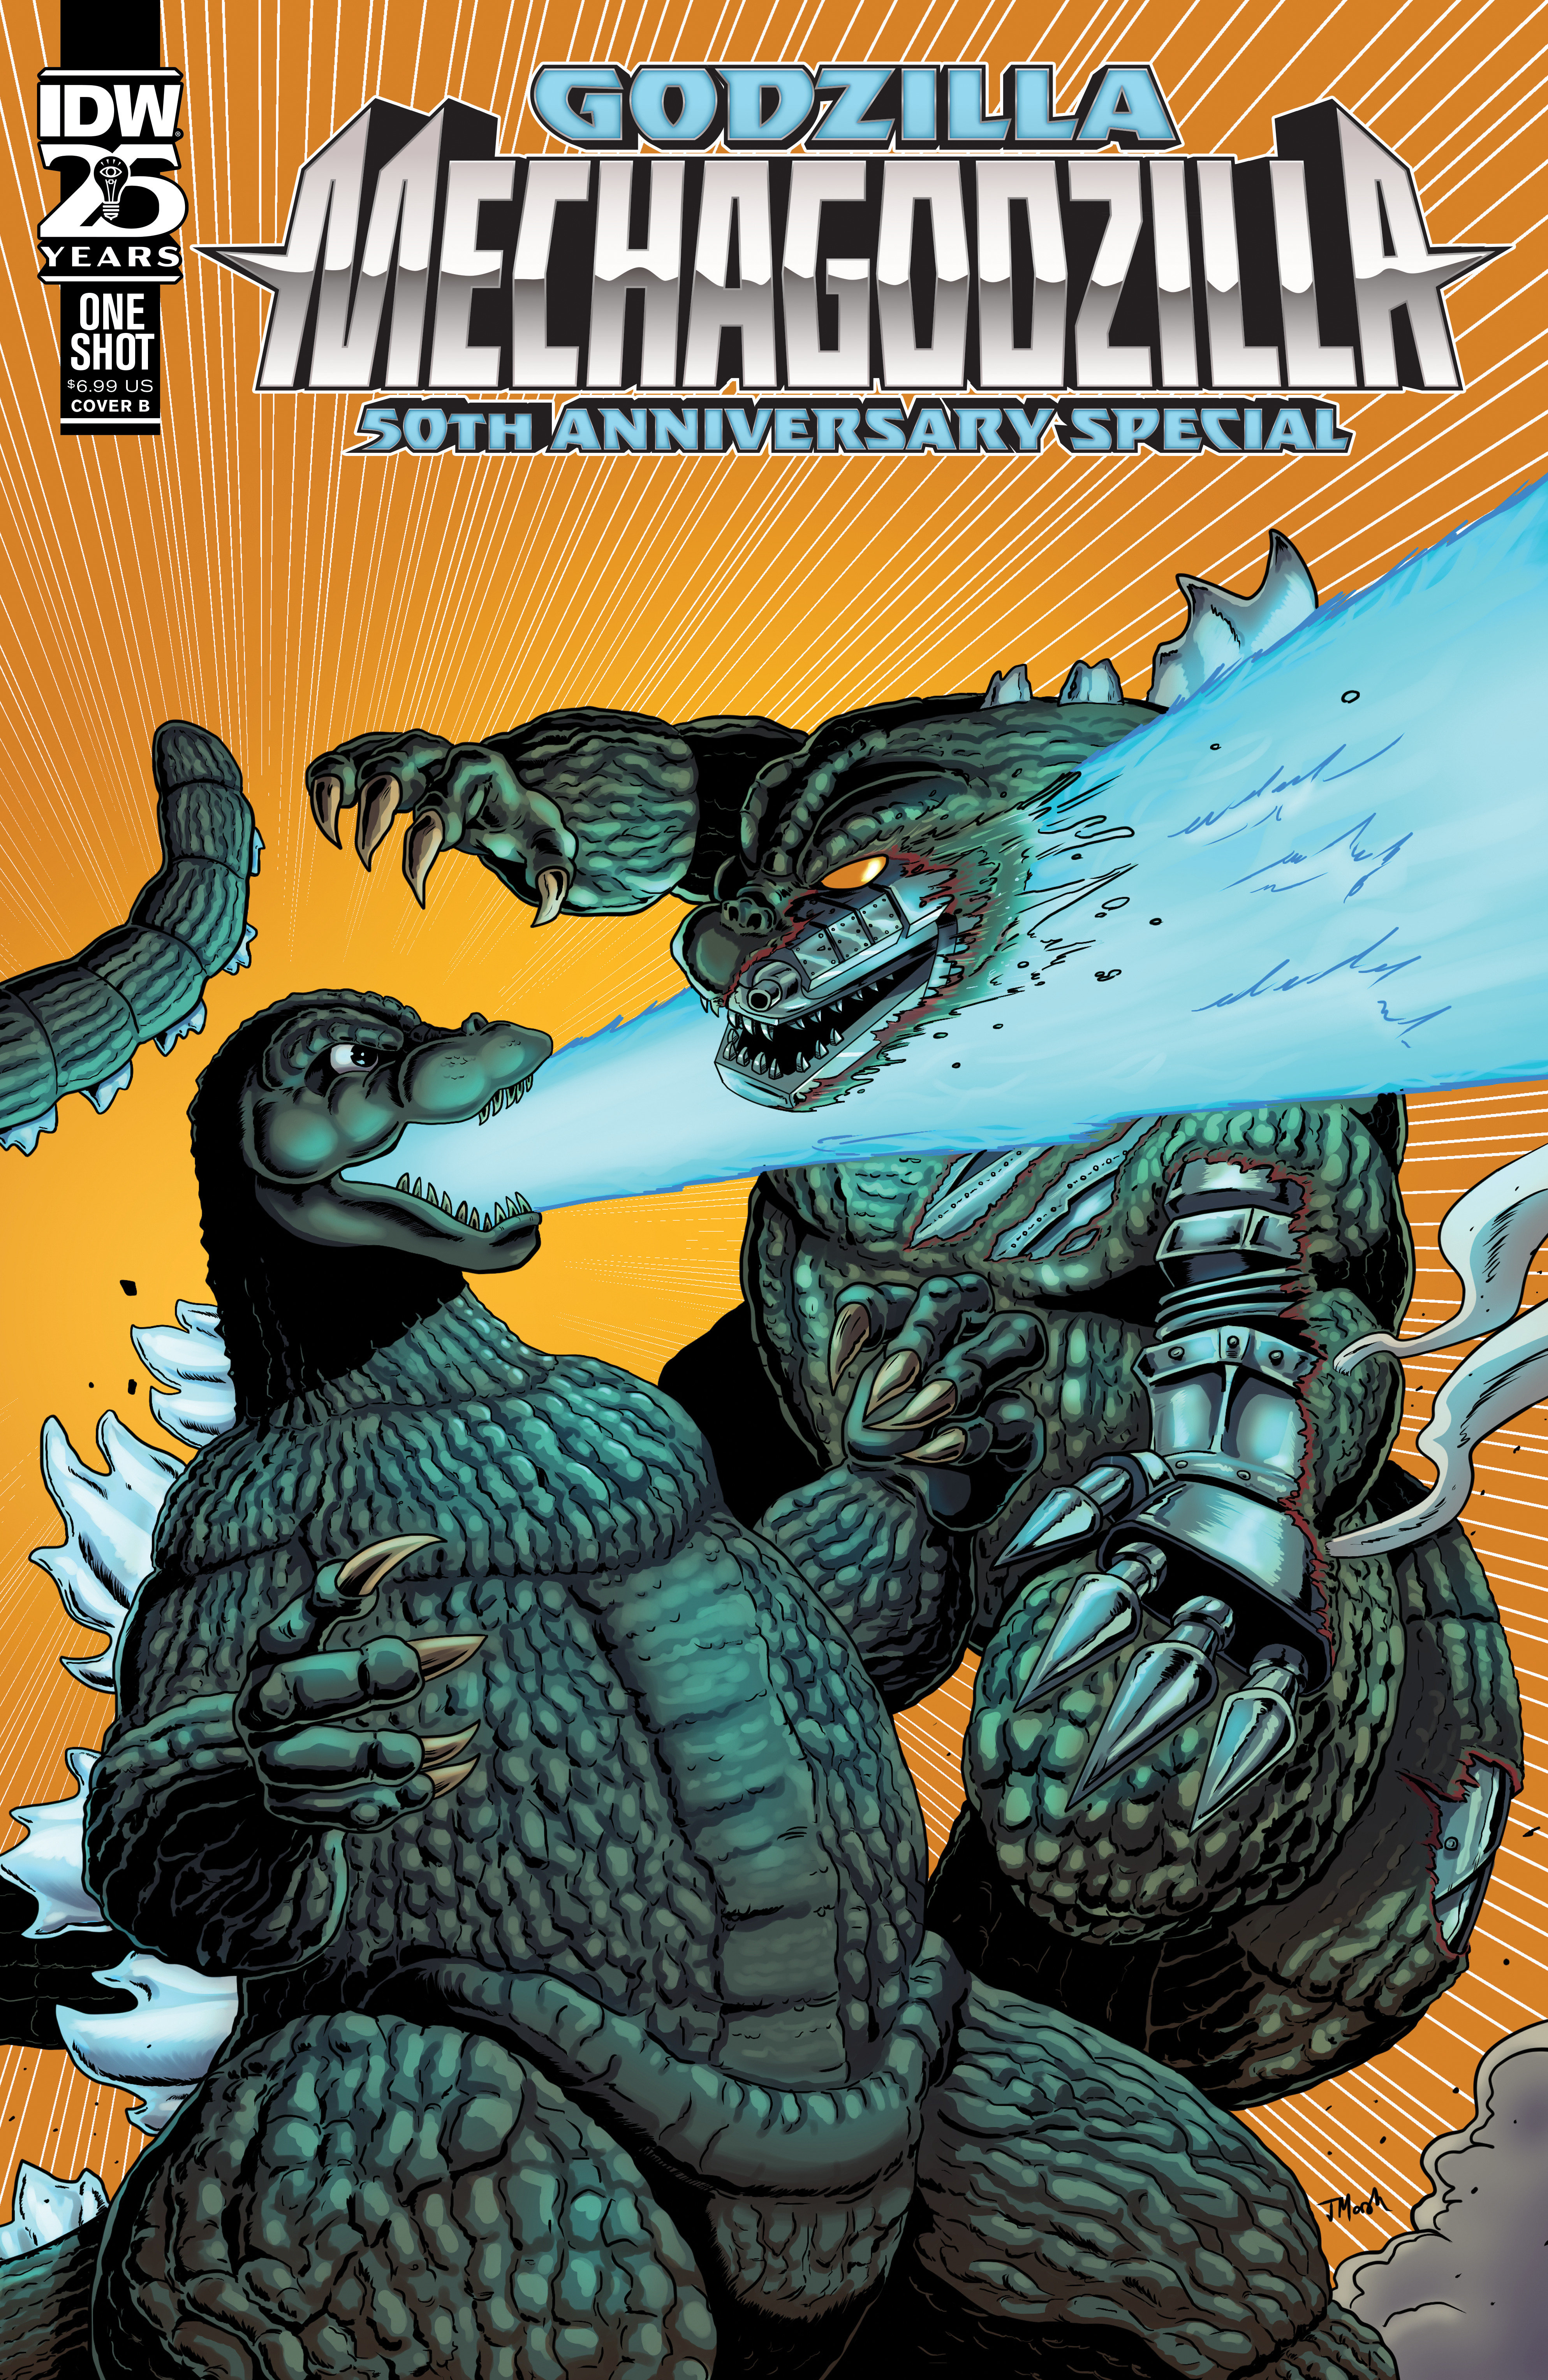 Godzilla Mechagodzilla 50th Anniversary Cover B Marsh